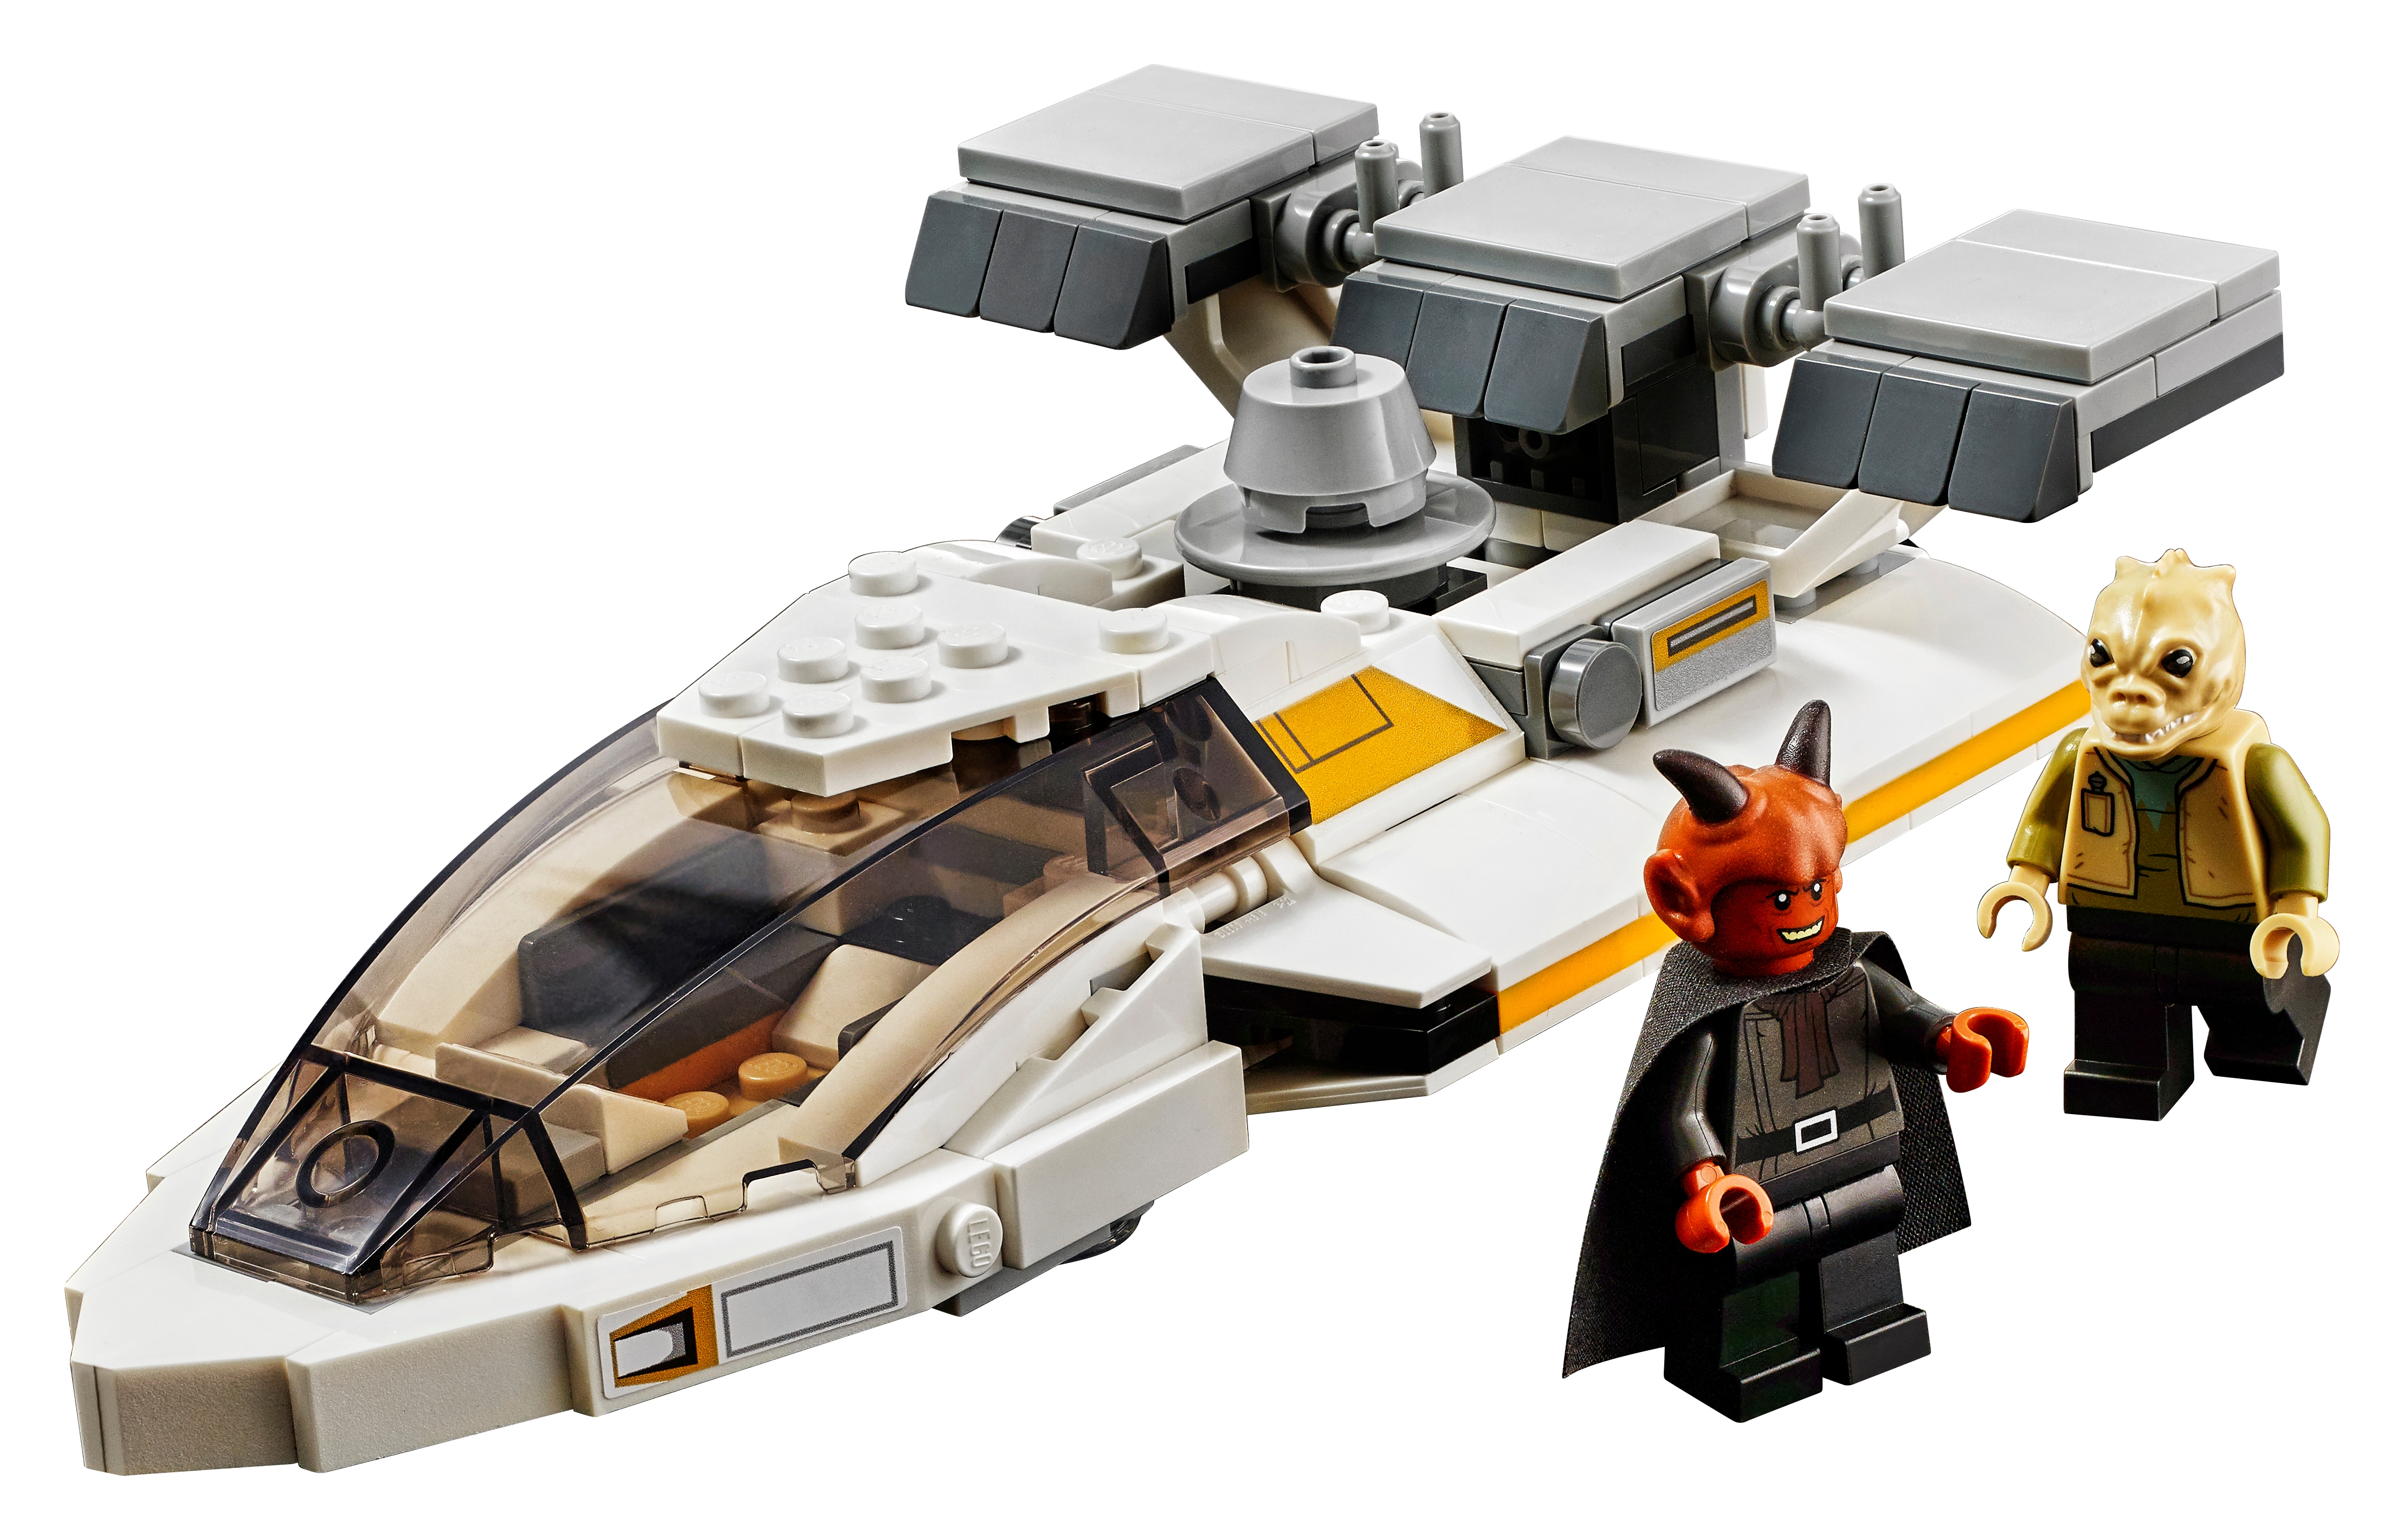 Cantina 75290 NEU Lego Star Wars hrchek Kal FAS Minifigur sw1130 Mos Eisley